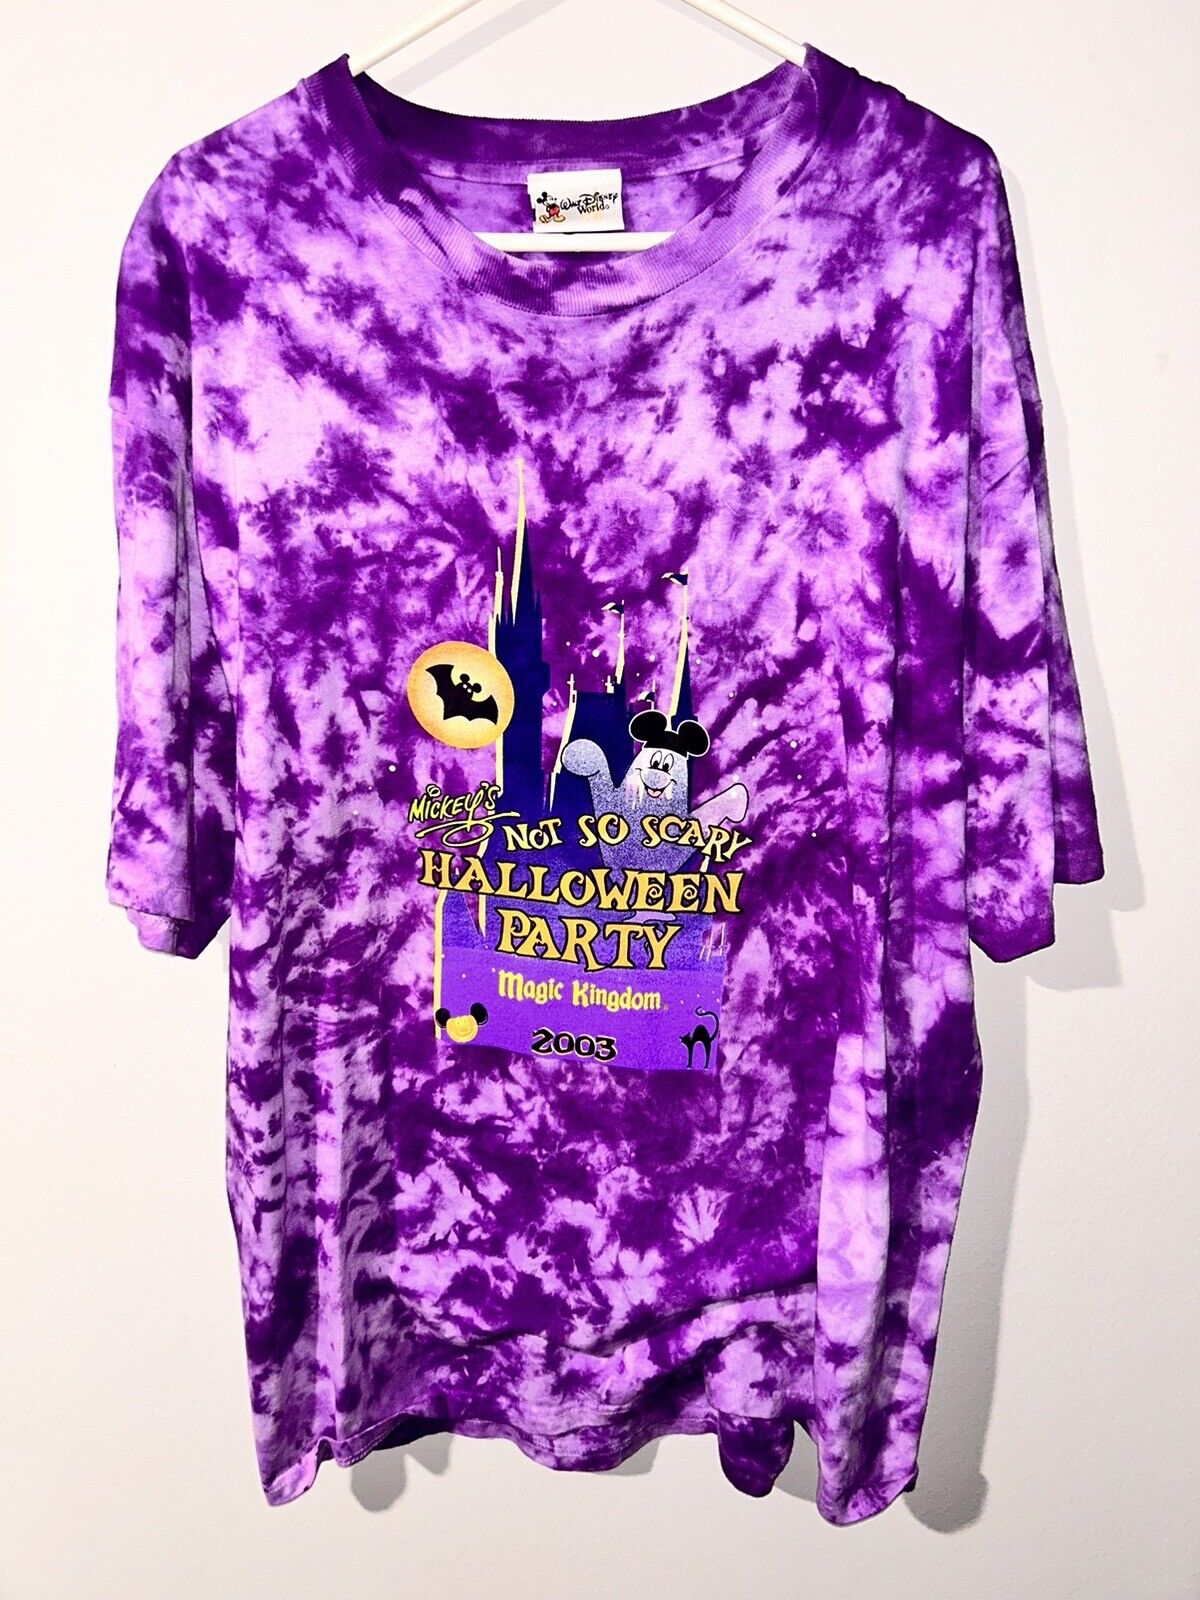 Disney Parks VTG T Shirt Mickey Not So Scary Halloween Party 2003 Tye-Dye LG